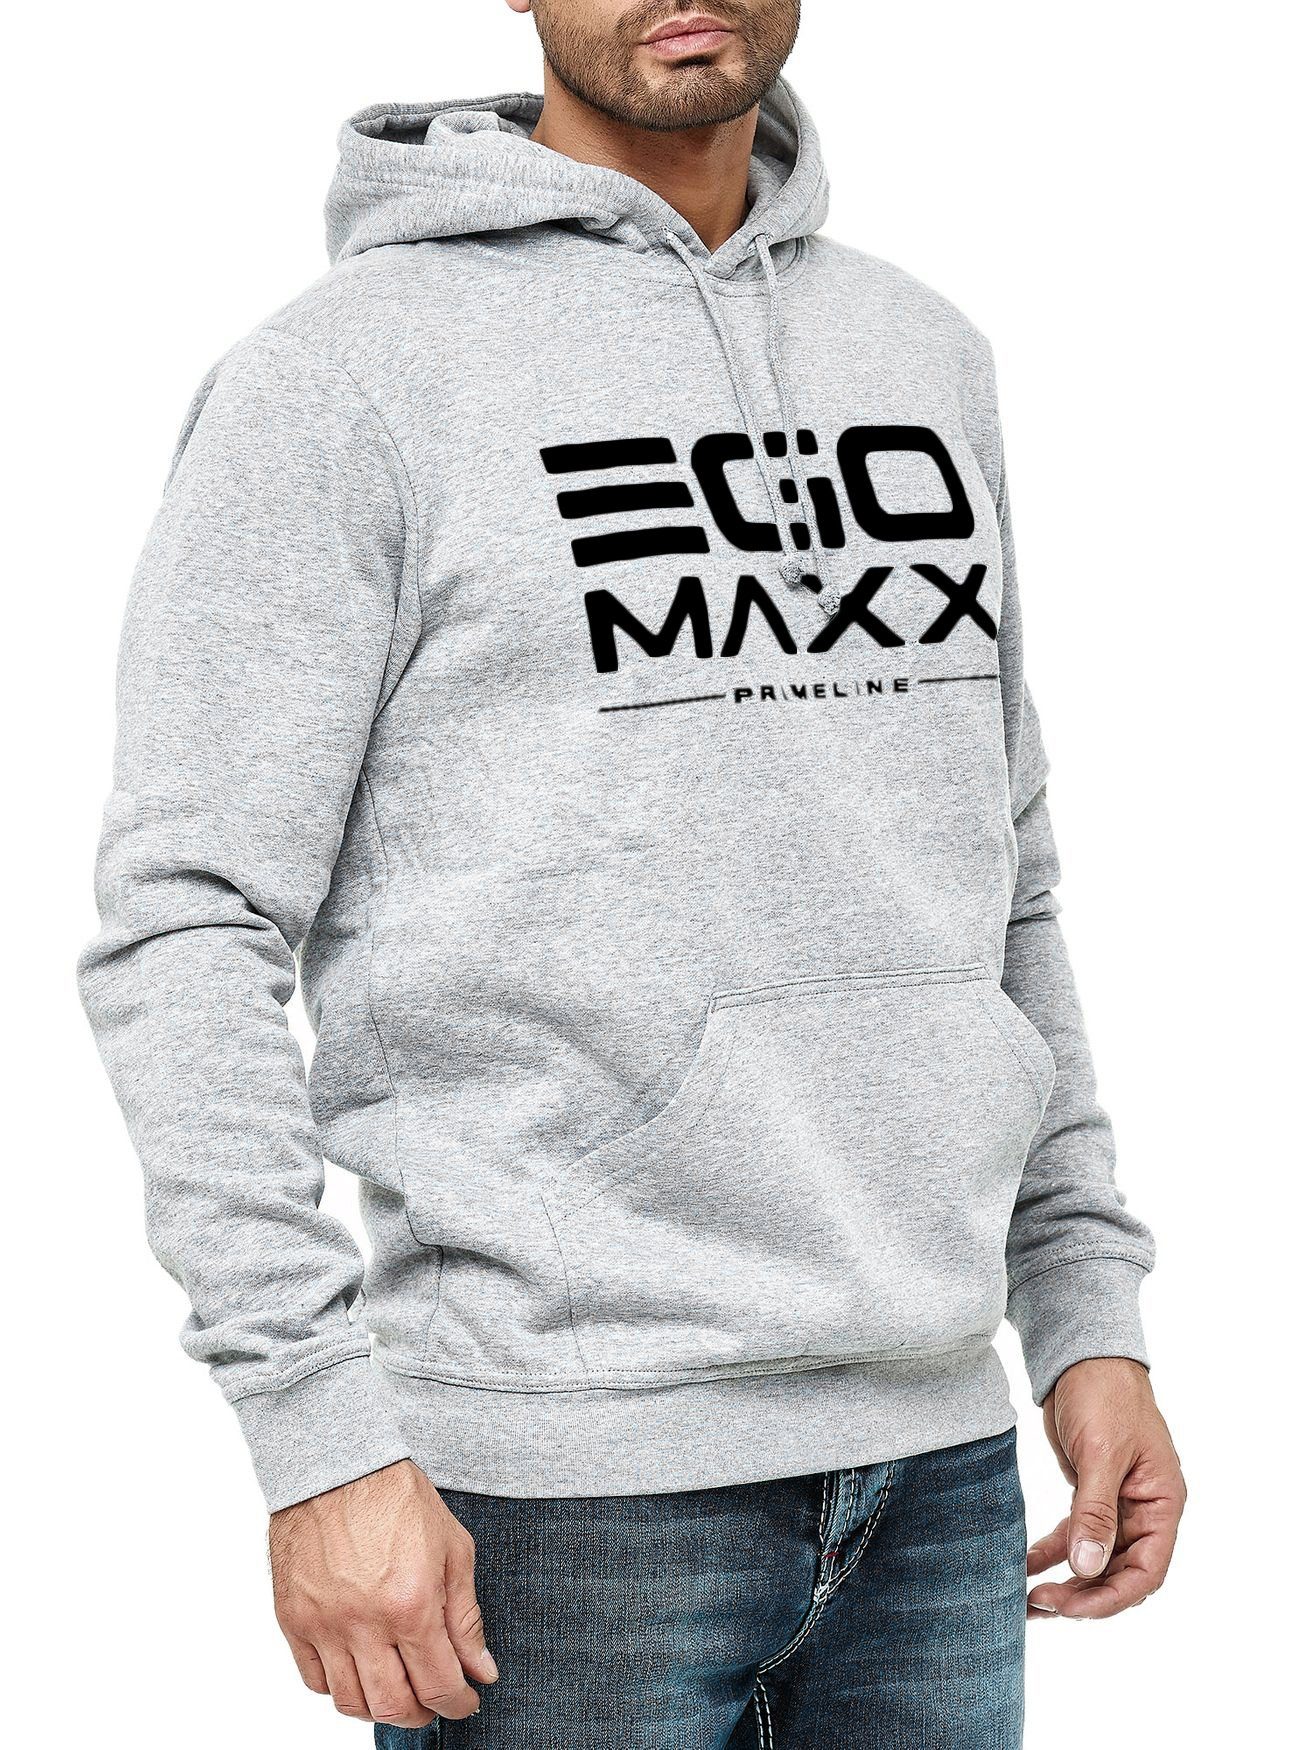 EGO Sweater Grau Design Hoodie Kapuzenpullover Sweatjacke (1-tlg) Egomaxx 3042 Hoodie in